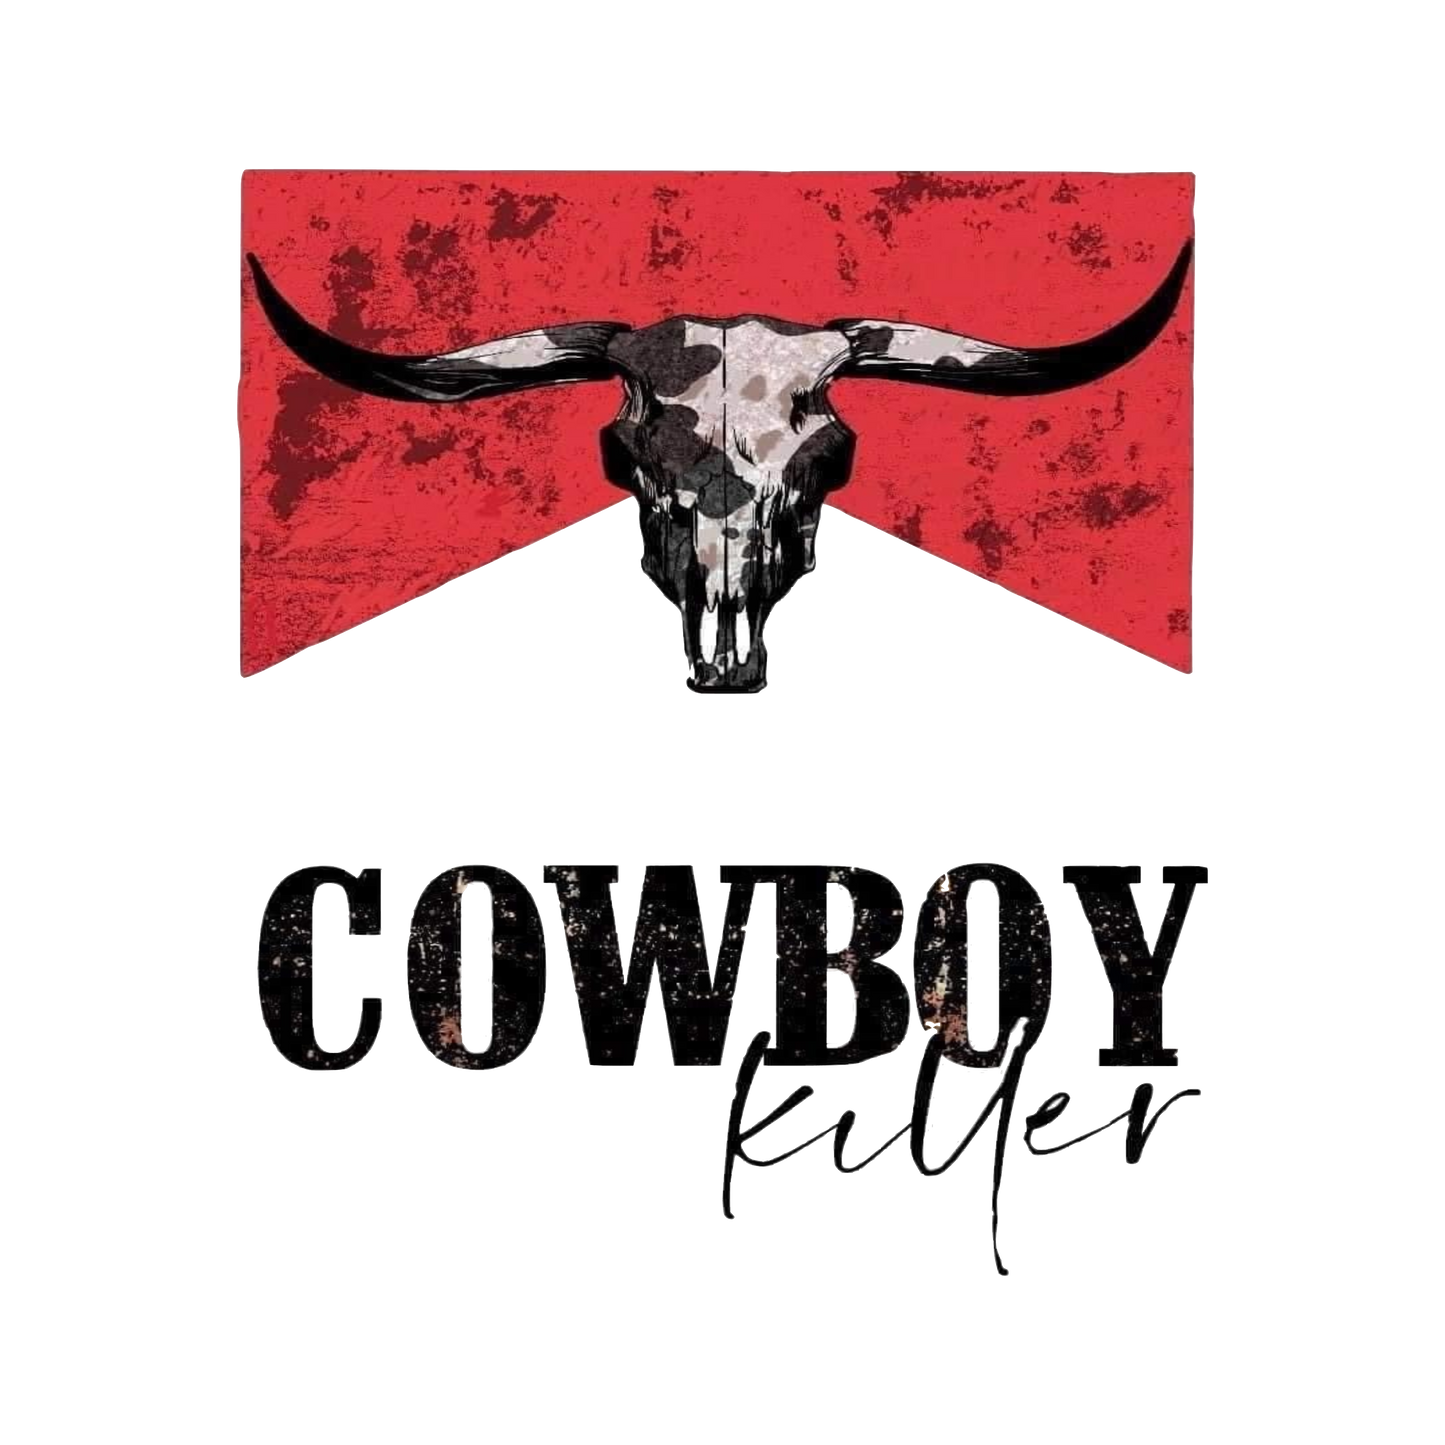 Cowboy killer